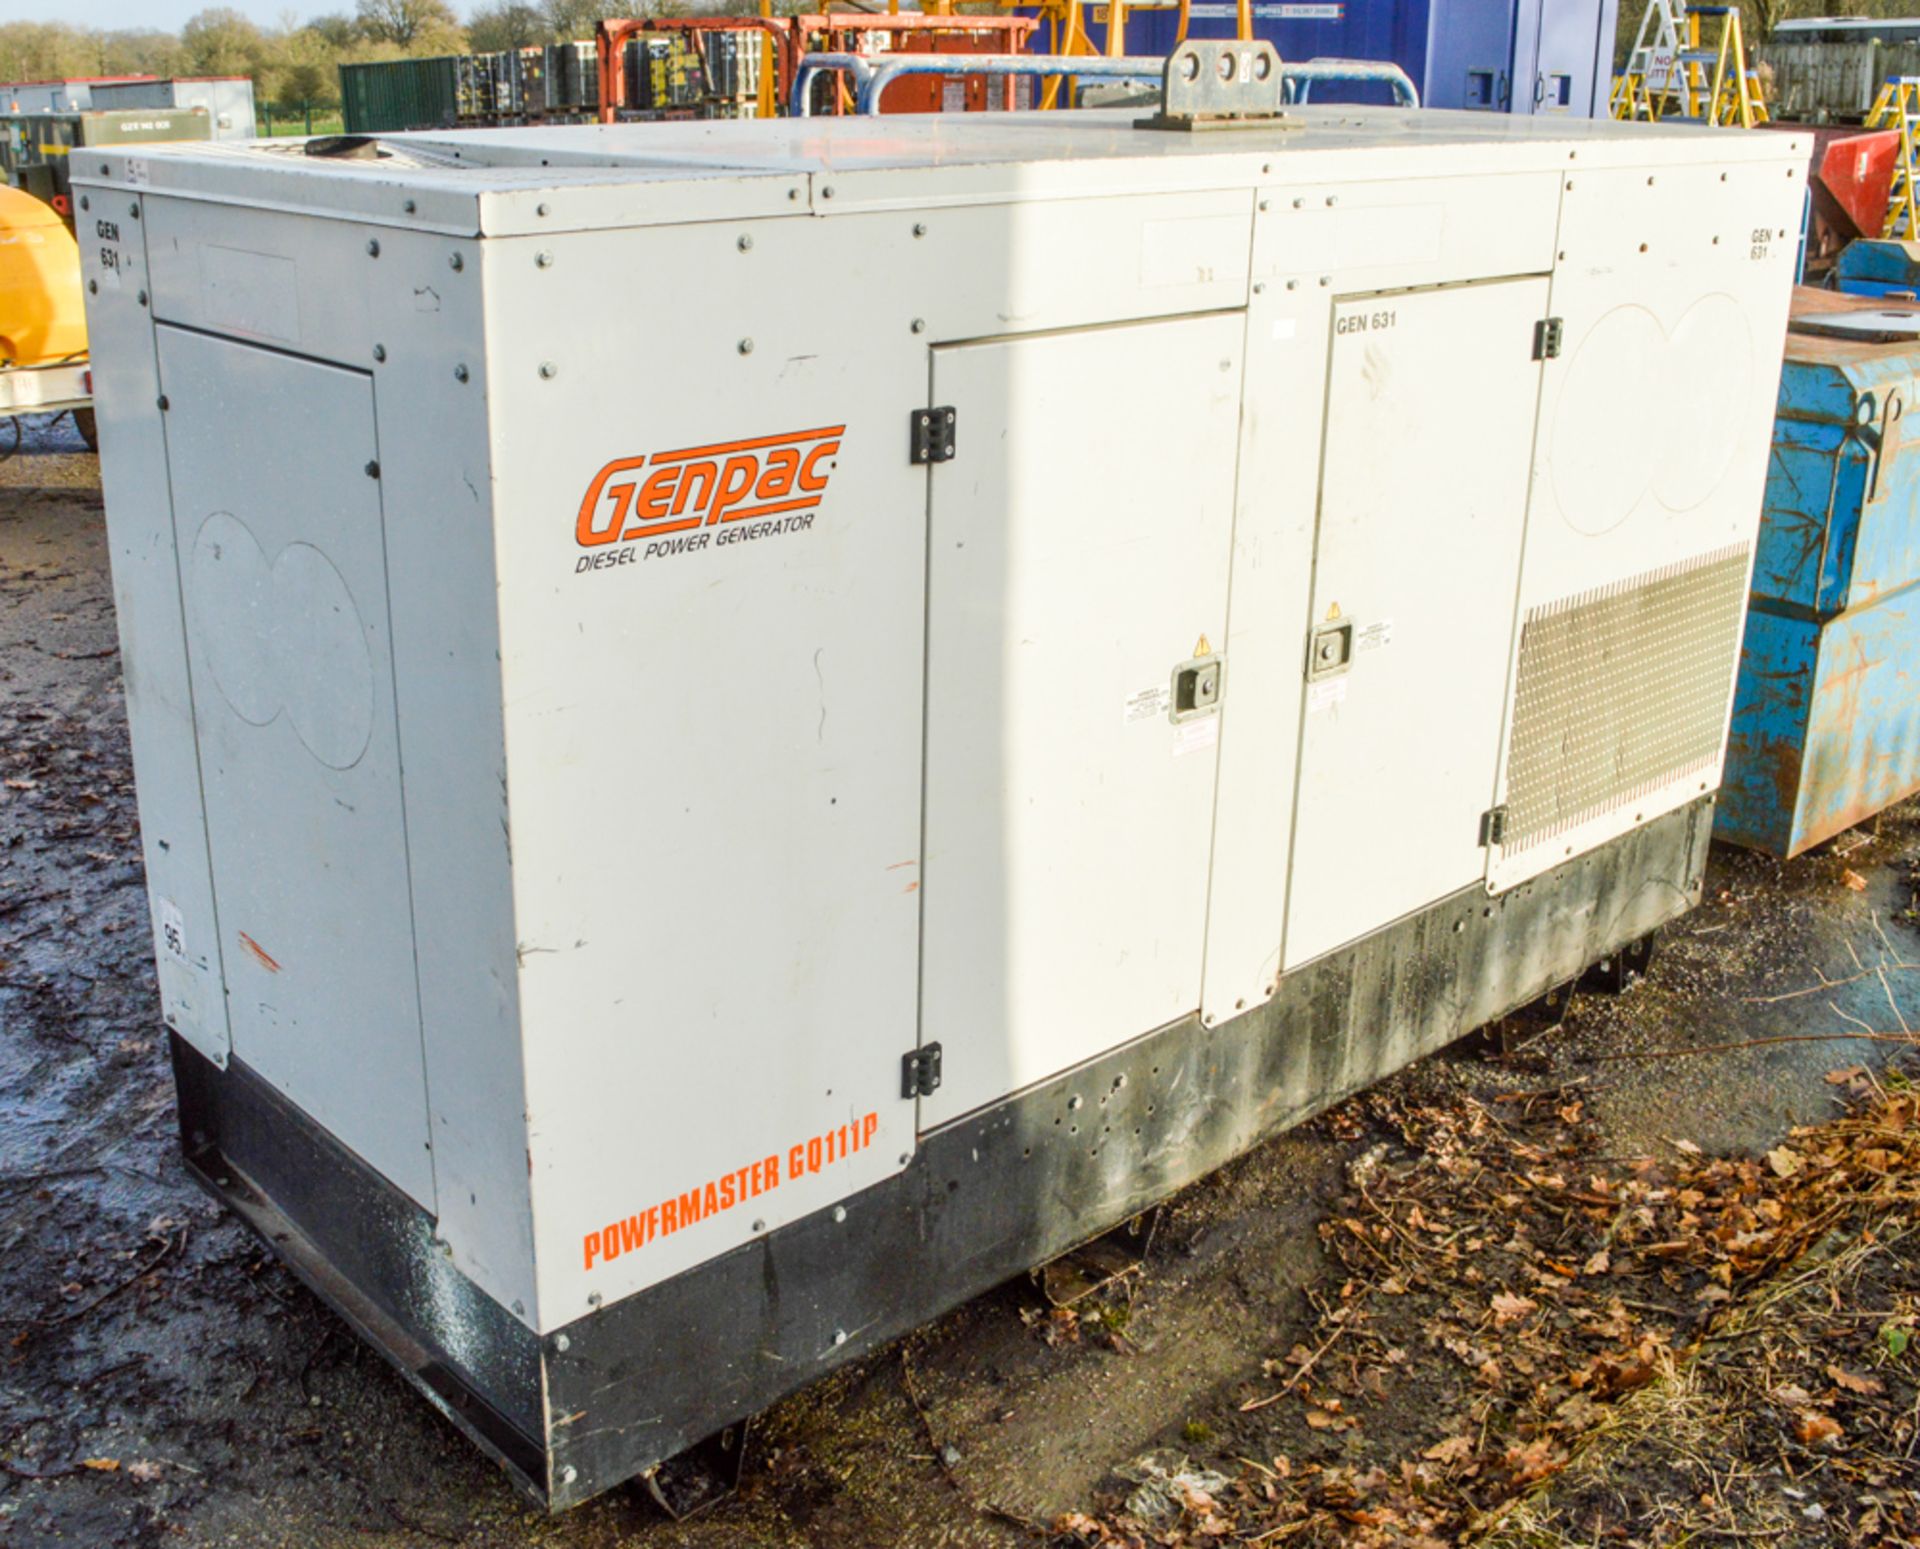 SMC Genpac Powermaster GQ111P 110 kva diesel driven generator GEN631 - Image 2 of 4